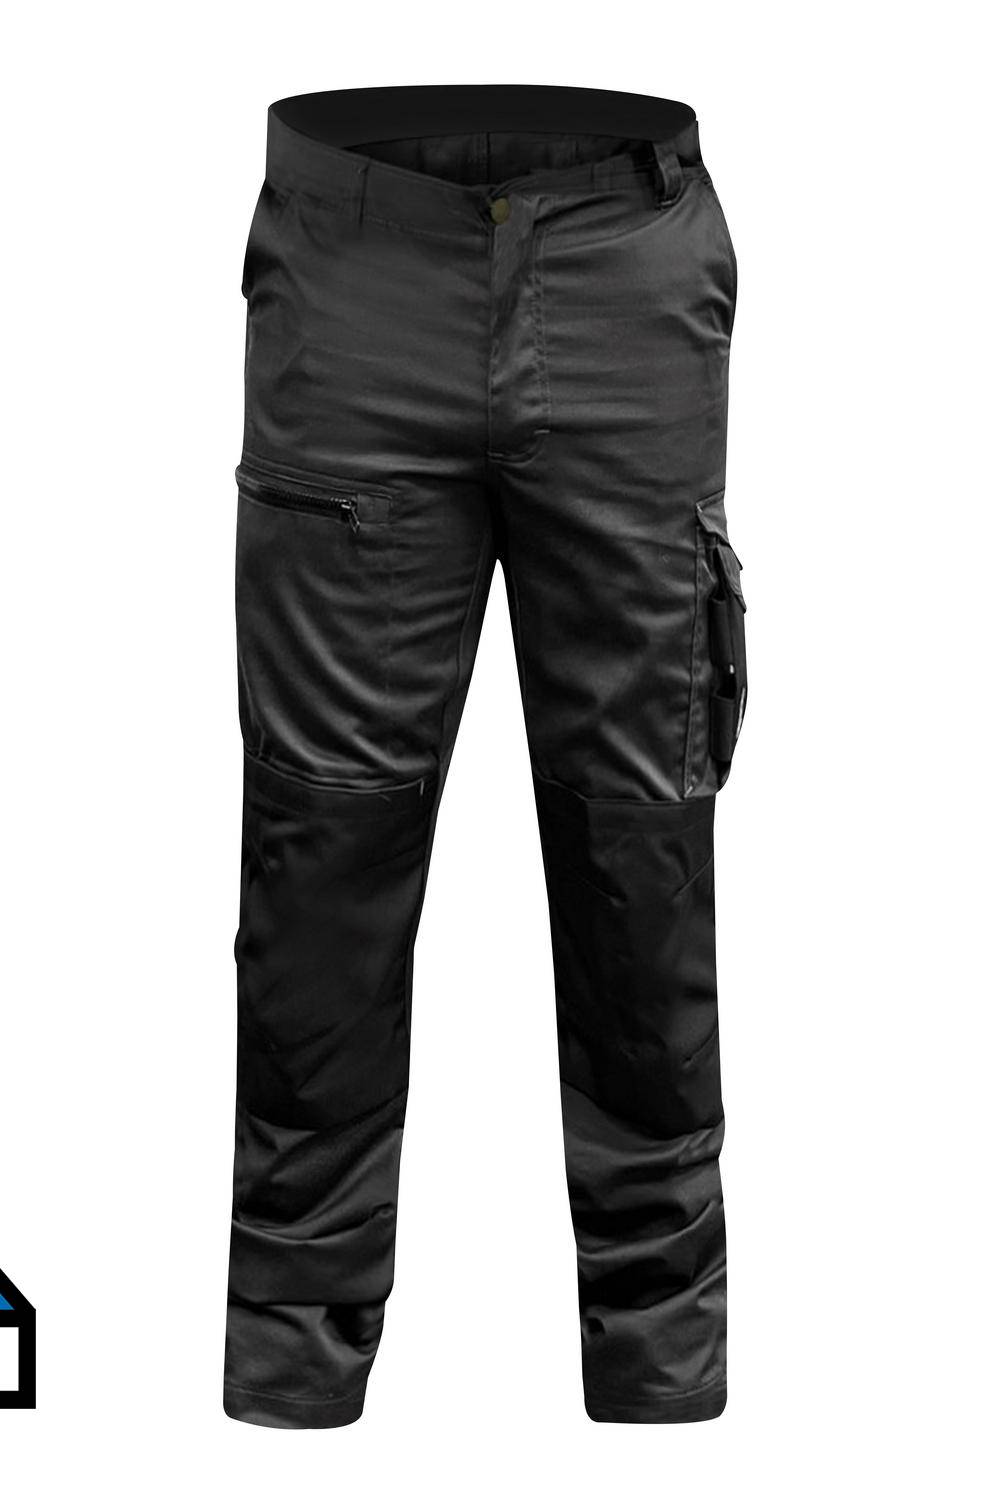 UBERMANN - Pantalón DKT Xpert gris XL